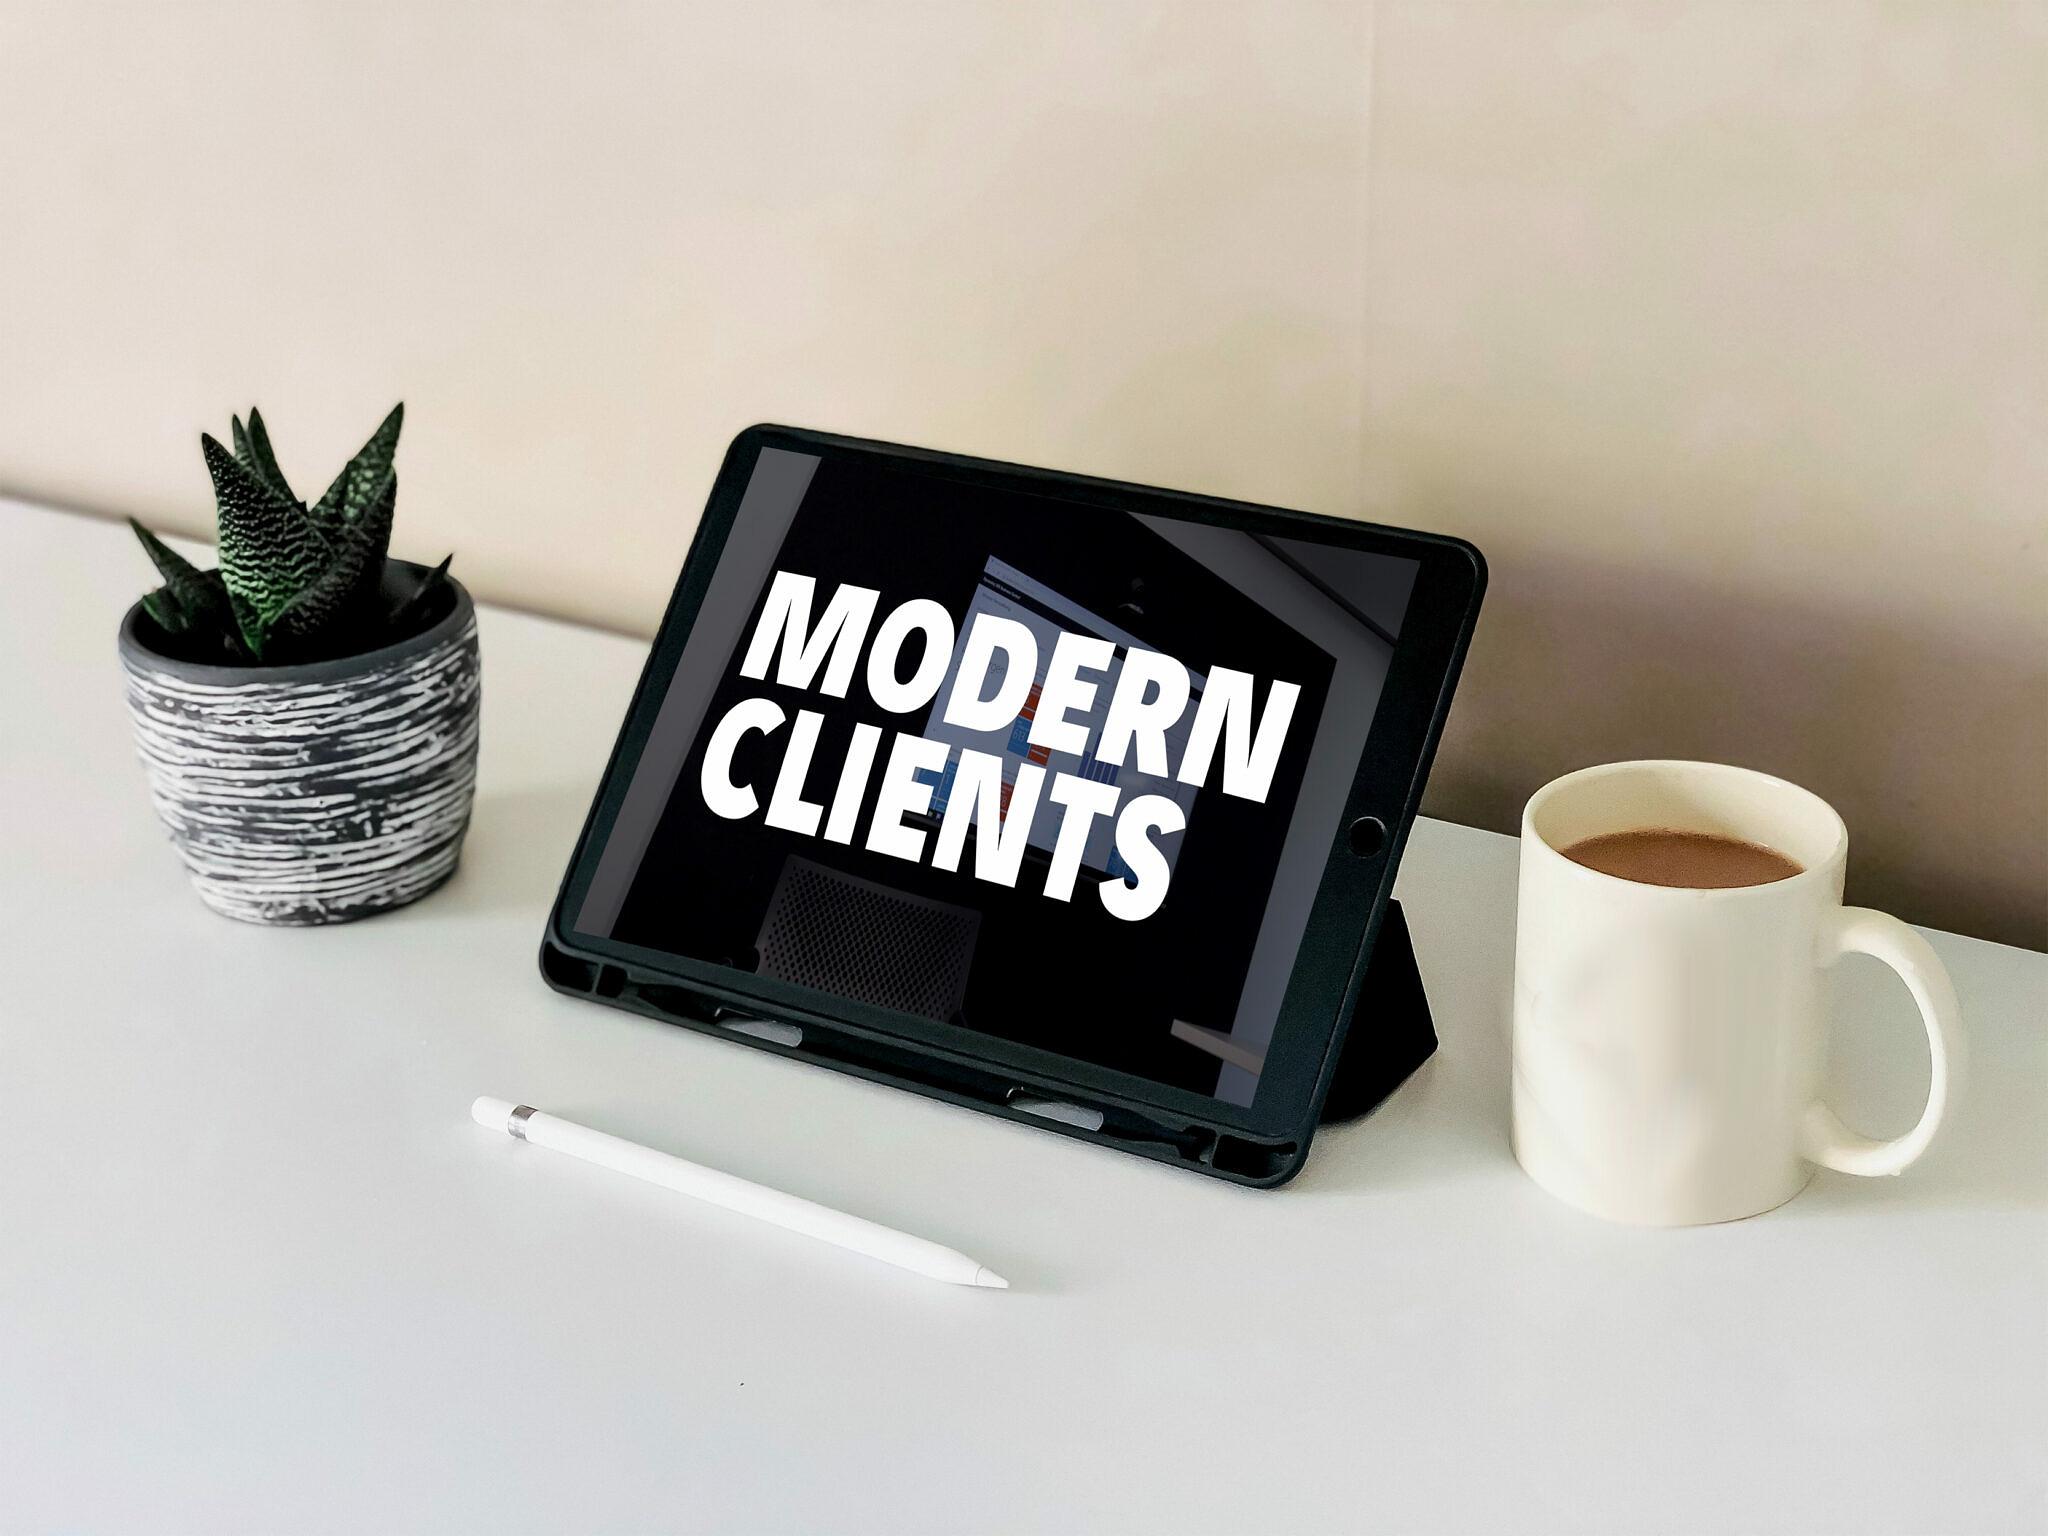 Modern Clients – Mobil, einfach, individuell und coole Standards